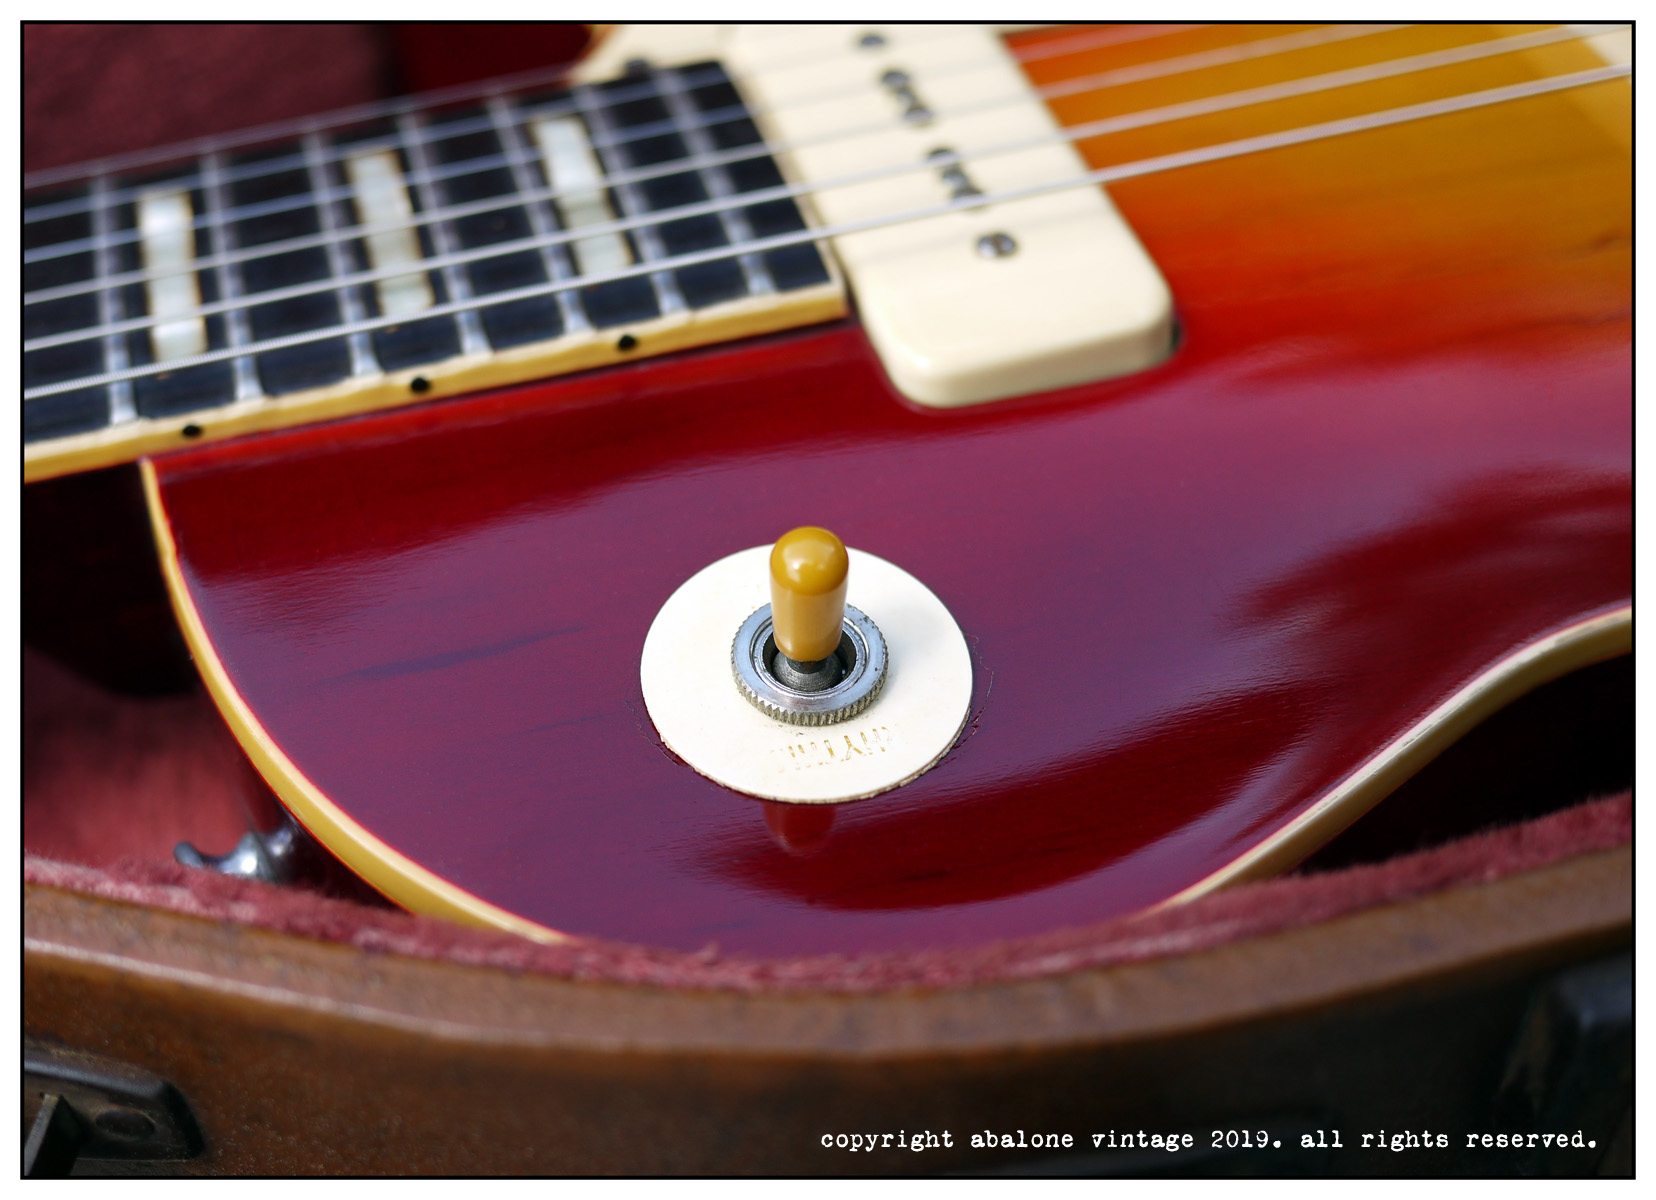 1953 Gibson Les Paul Standard guitar factory 1960 conversion.